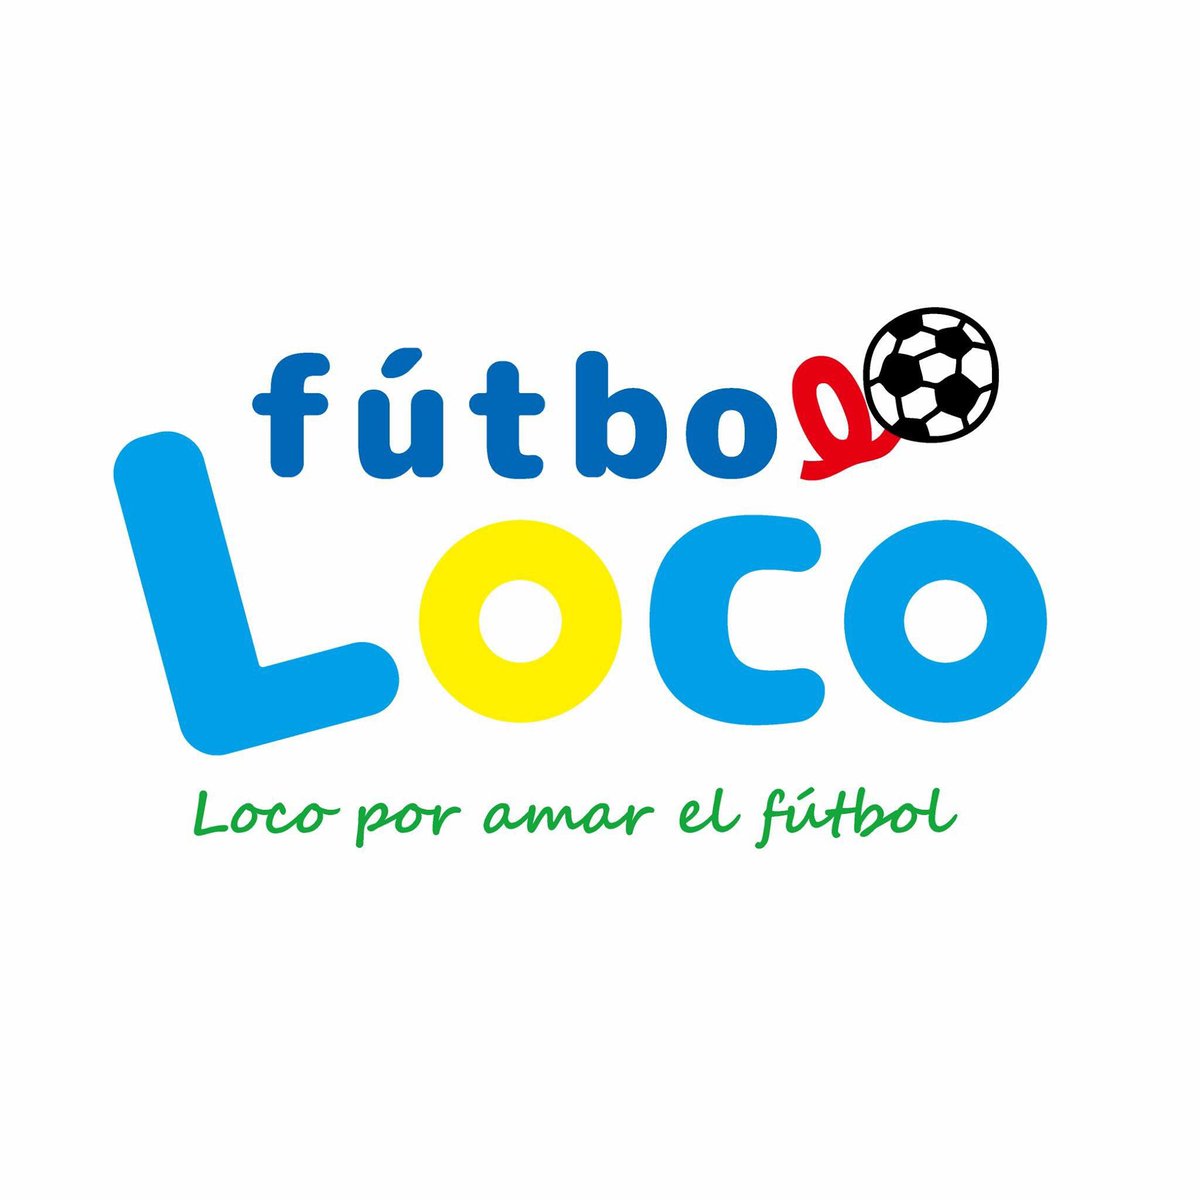 futbol_loco_ch tweet picture